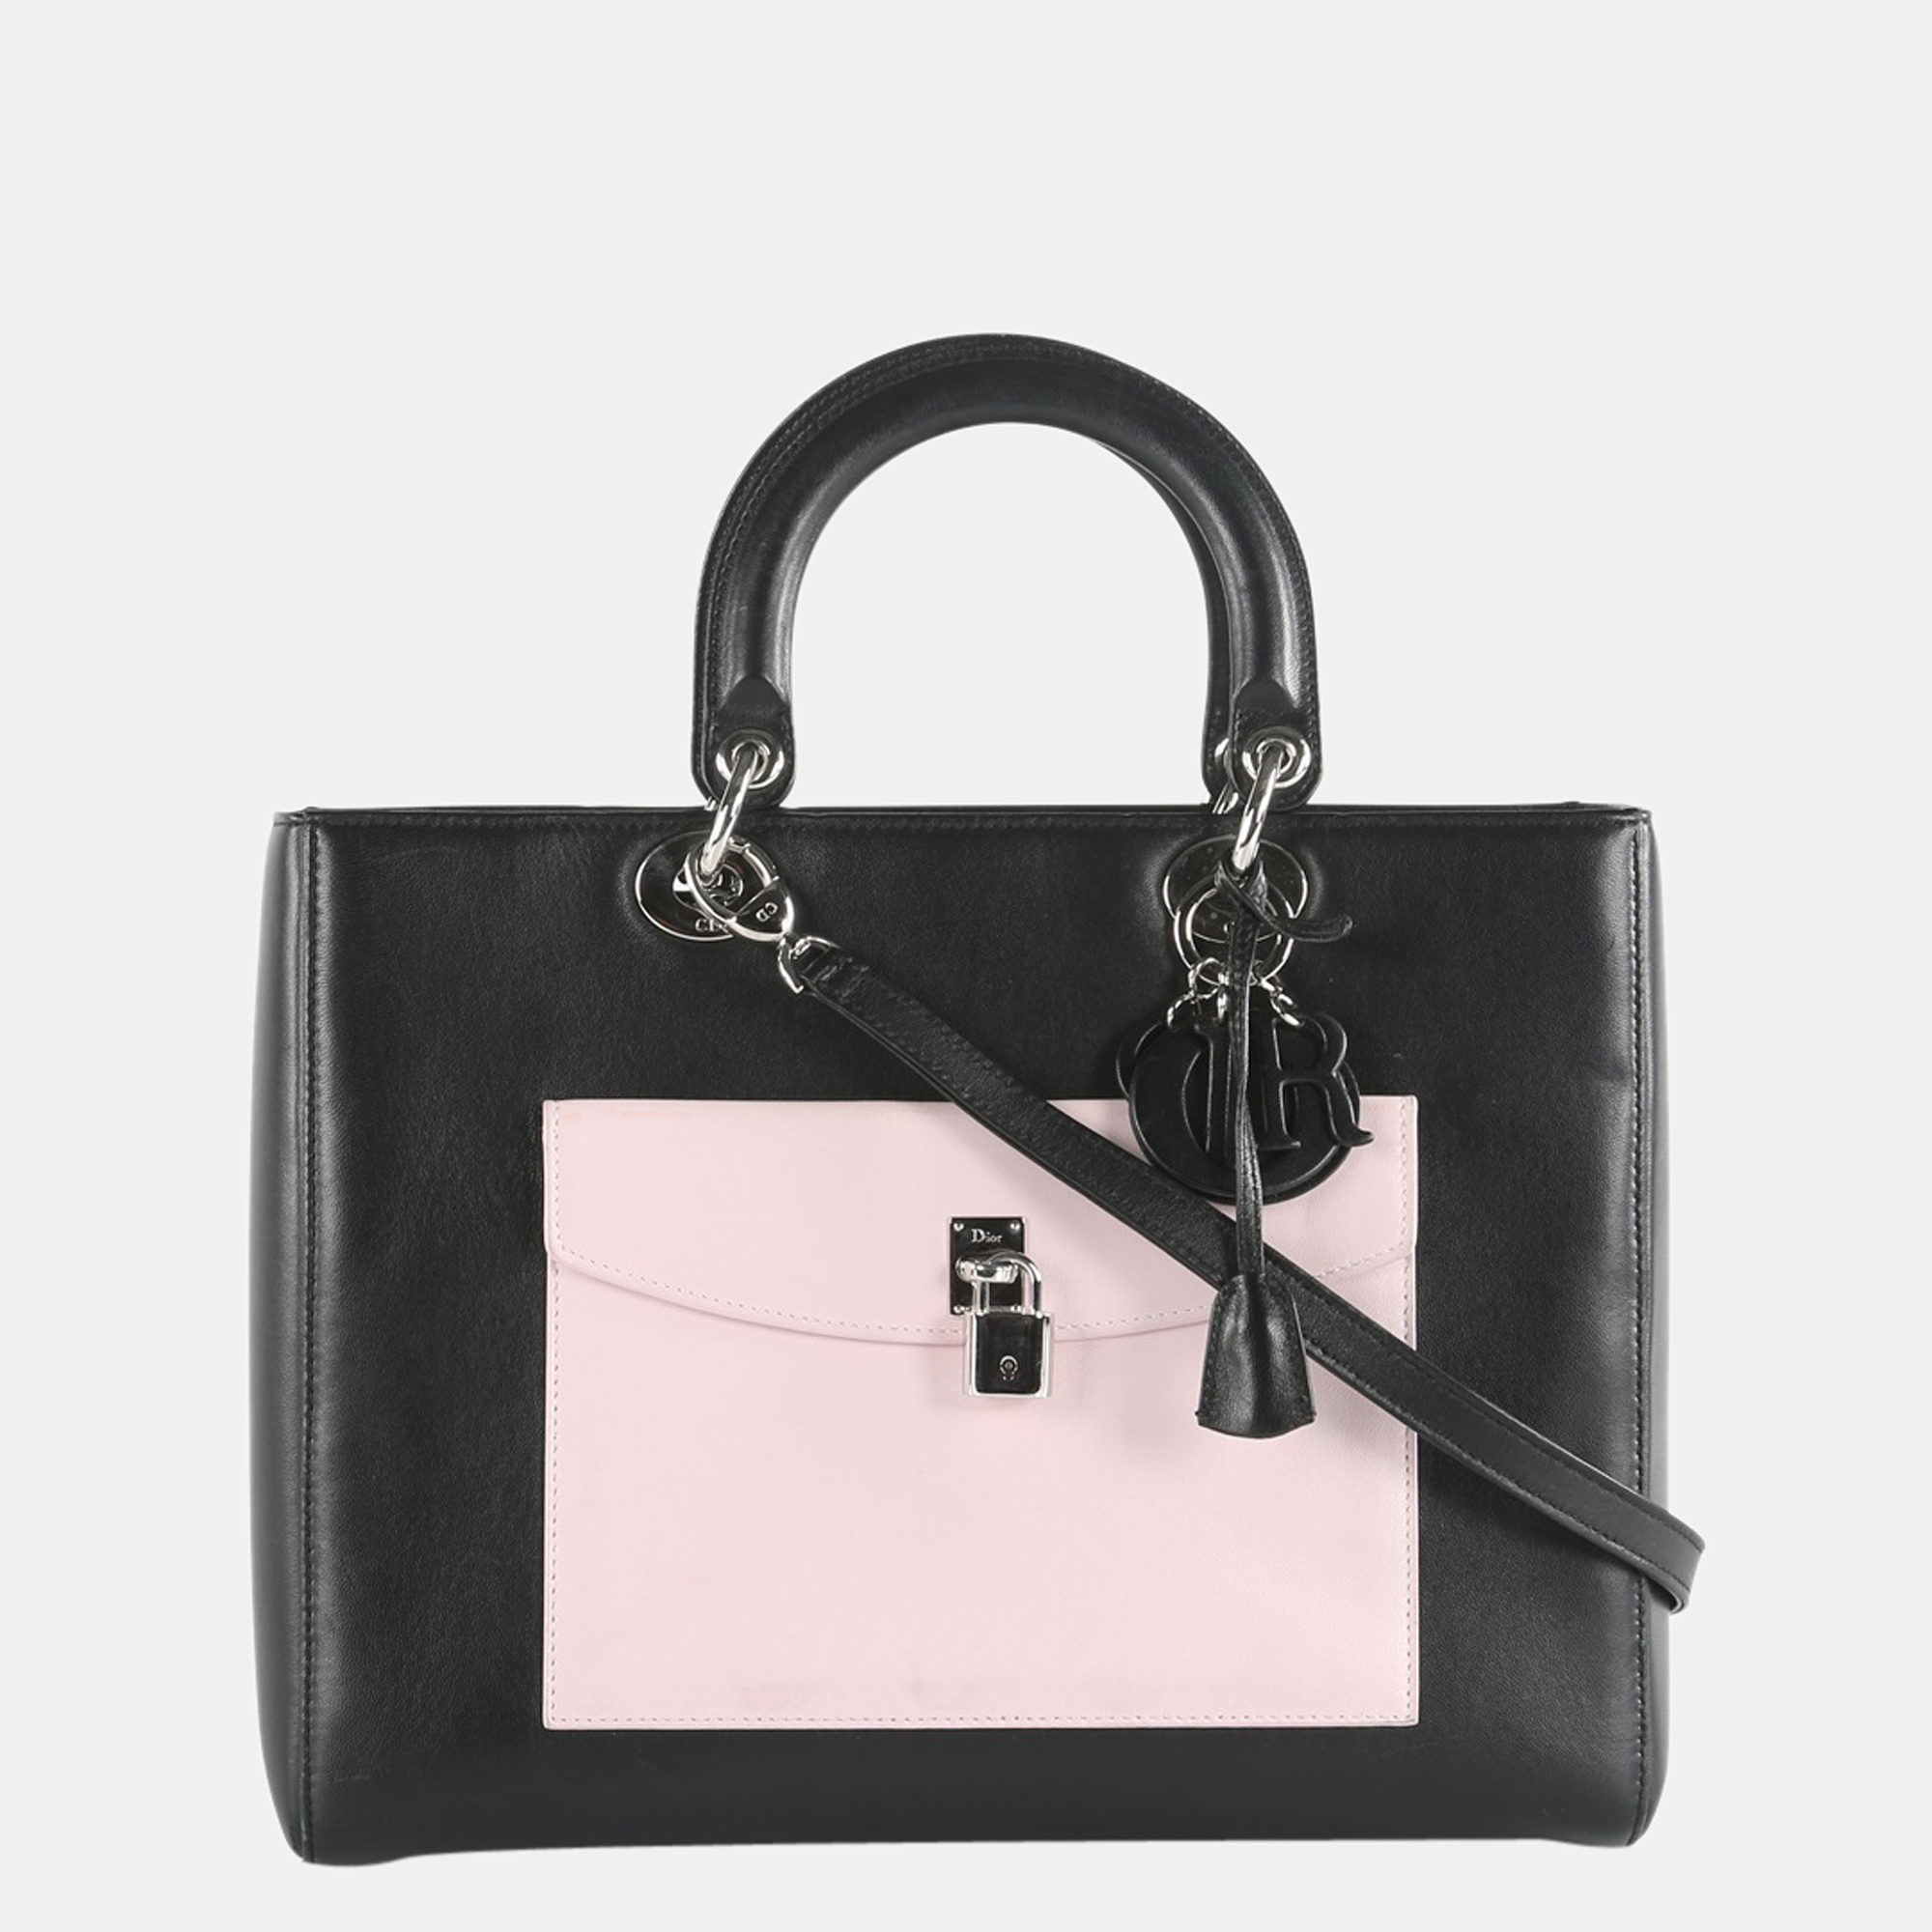 Dior Black Leather Limited Edition Pocket Large Lady Dior Tote Bag